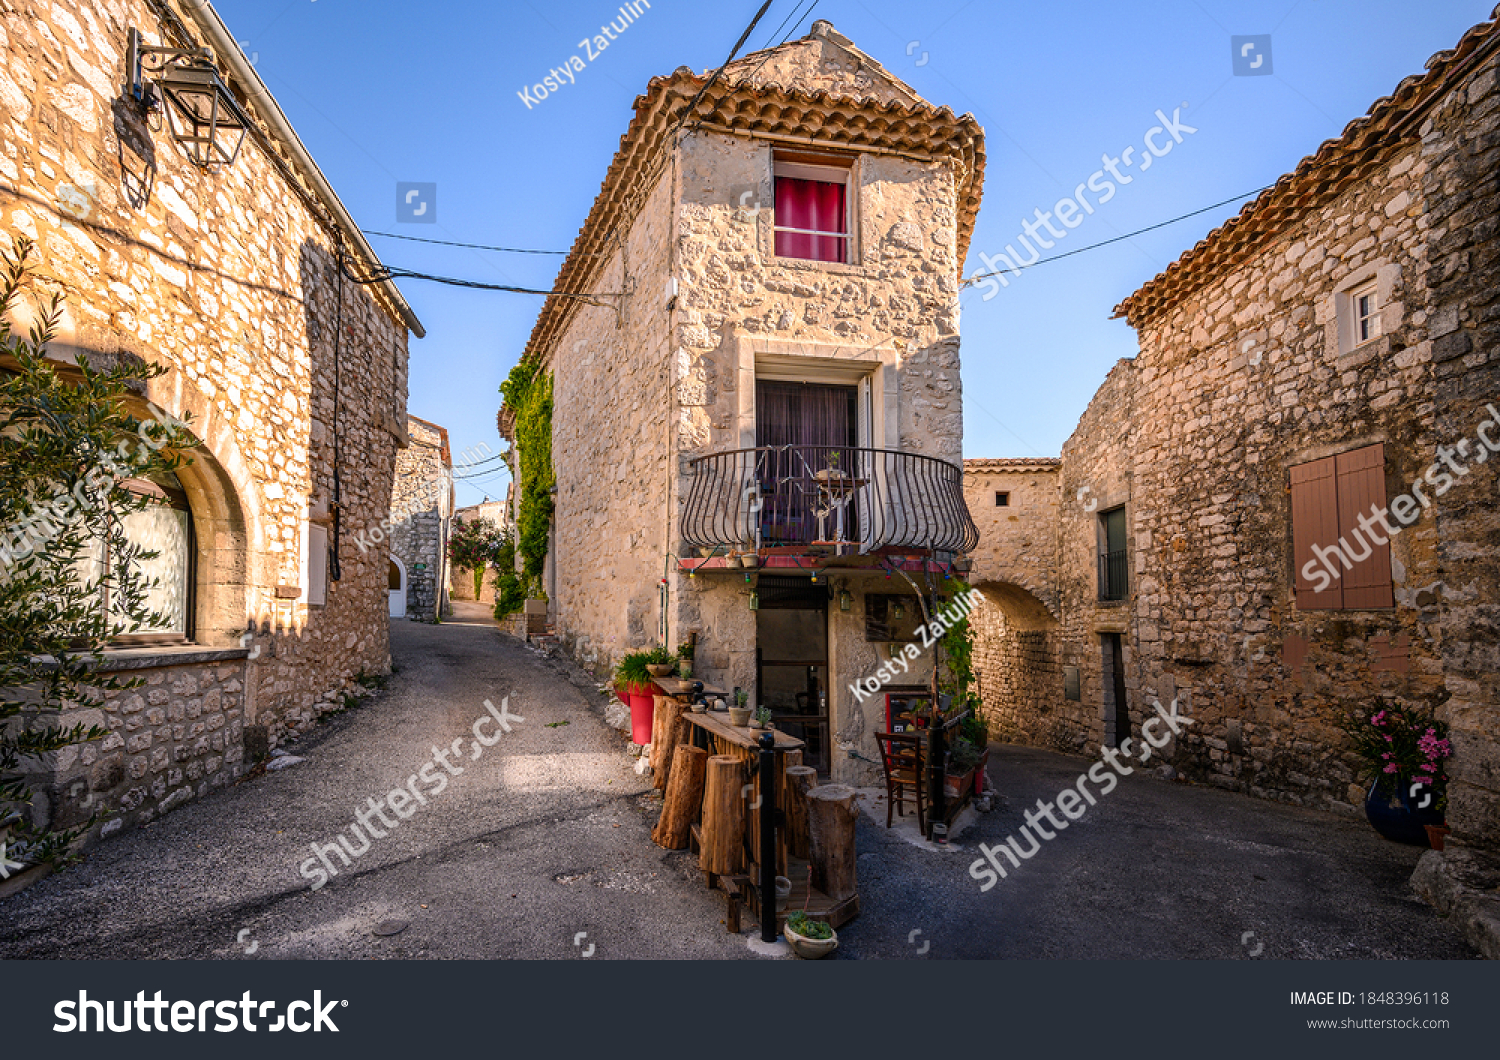 Narrow street in Dubrovnik old town #1848396118